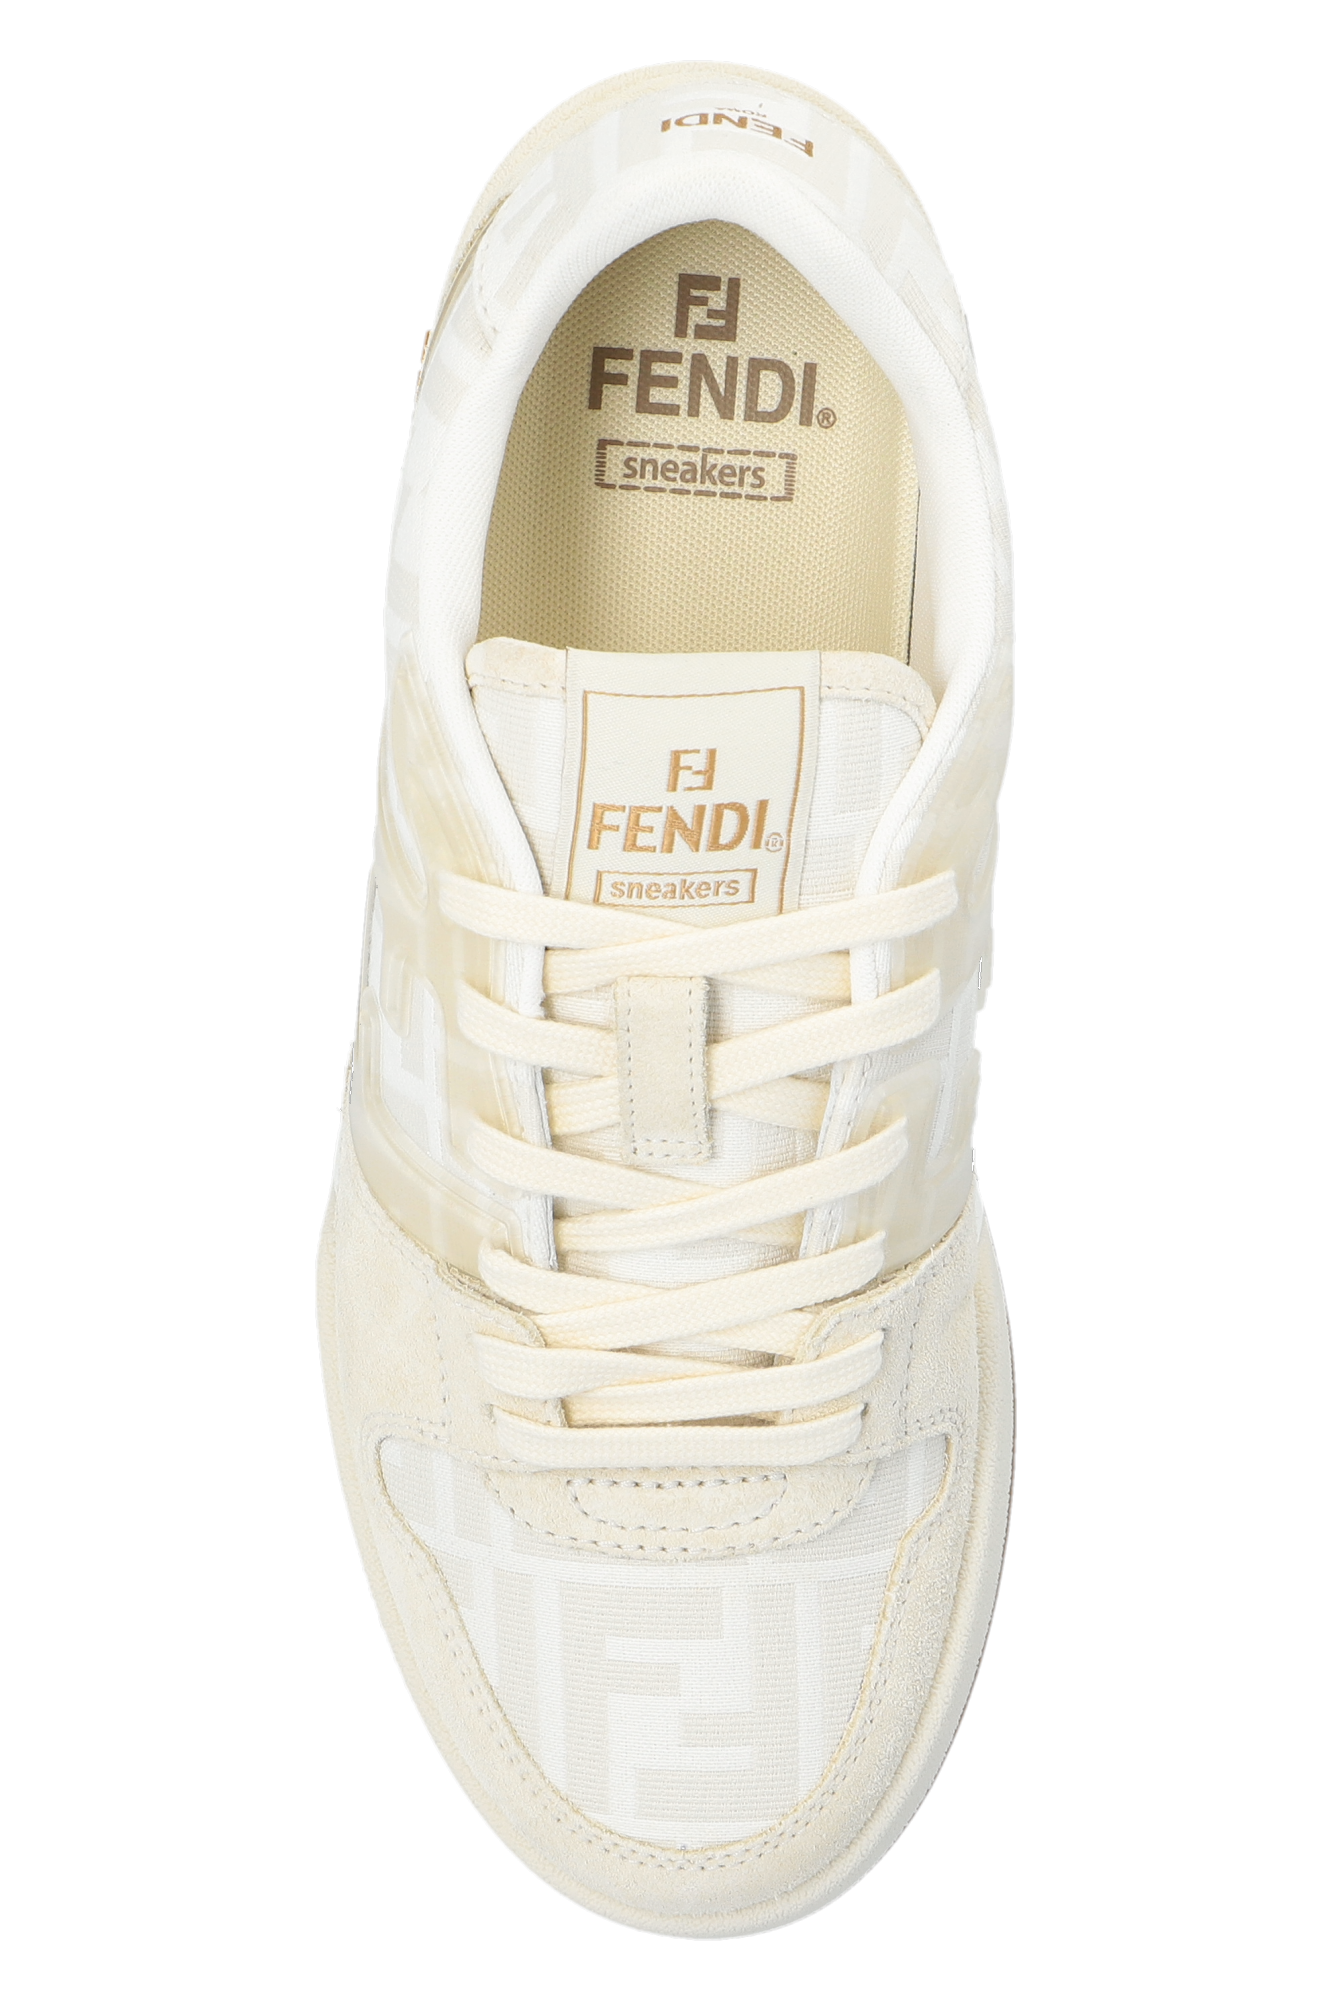 Fendi ‘Match’ sneakers